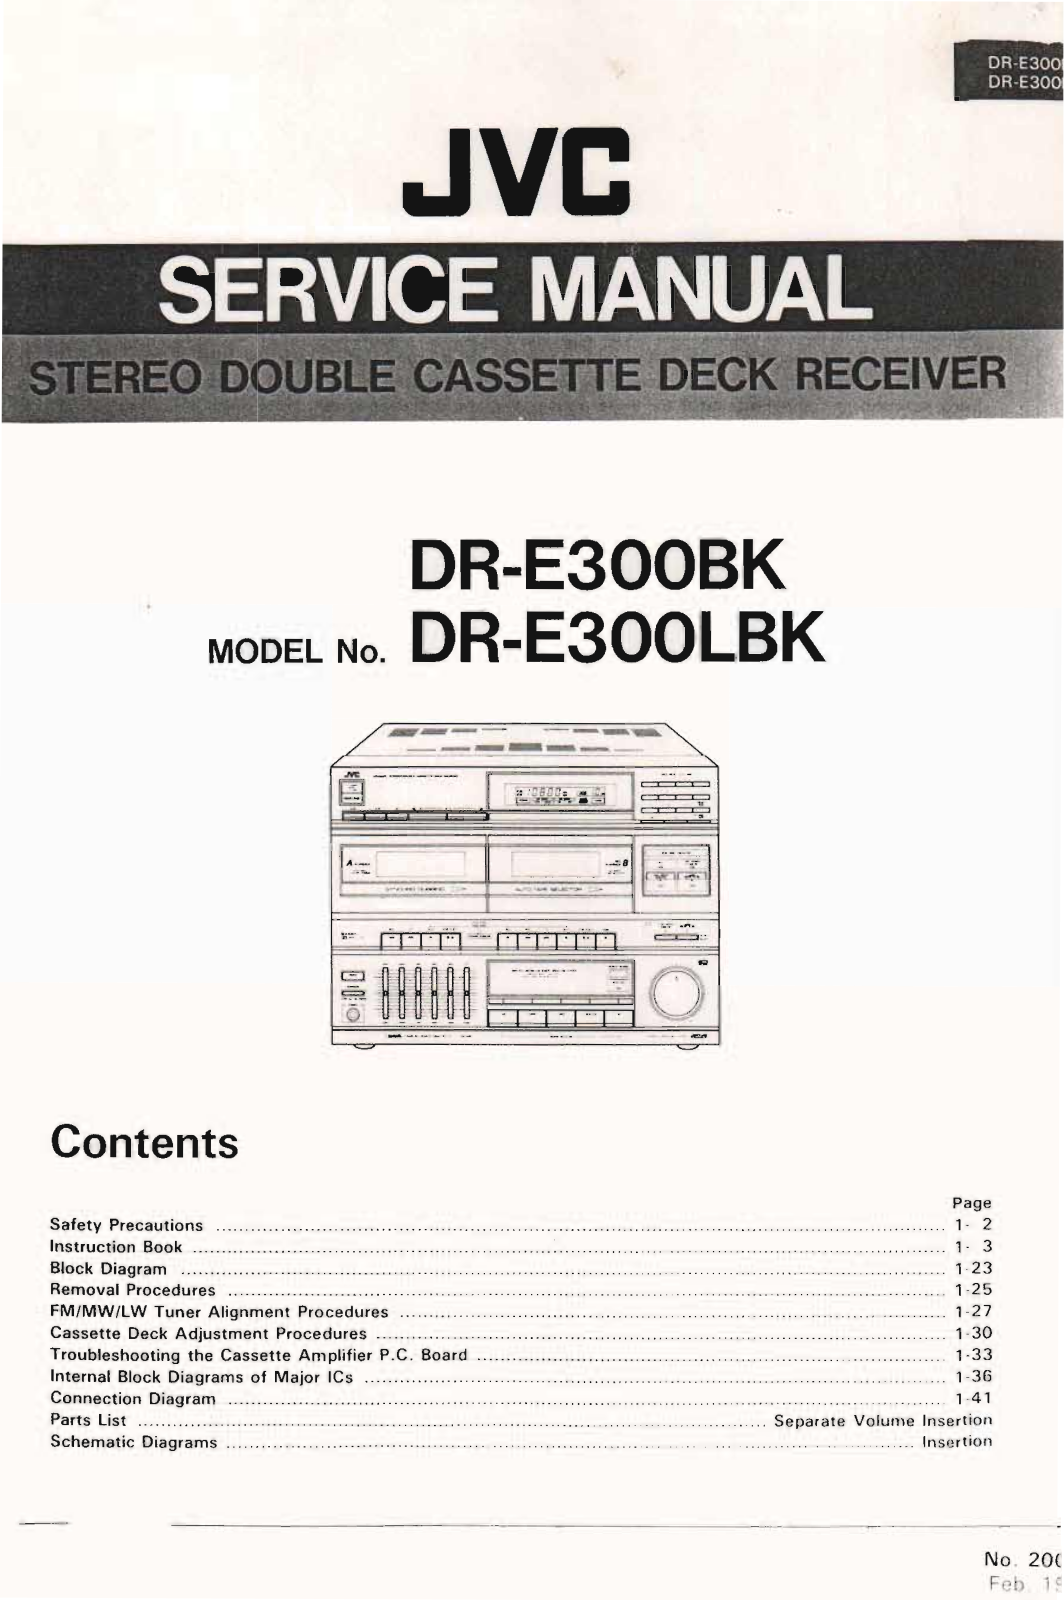 Jvc DR-E300-LBK Service Manual